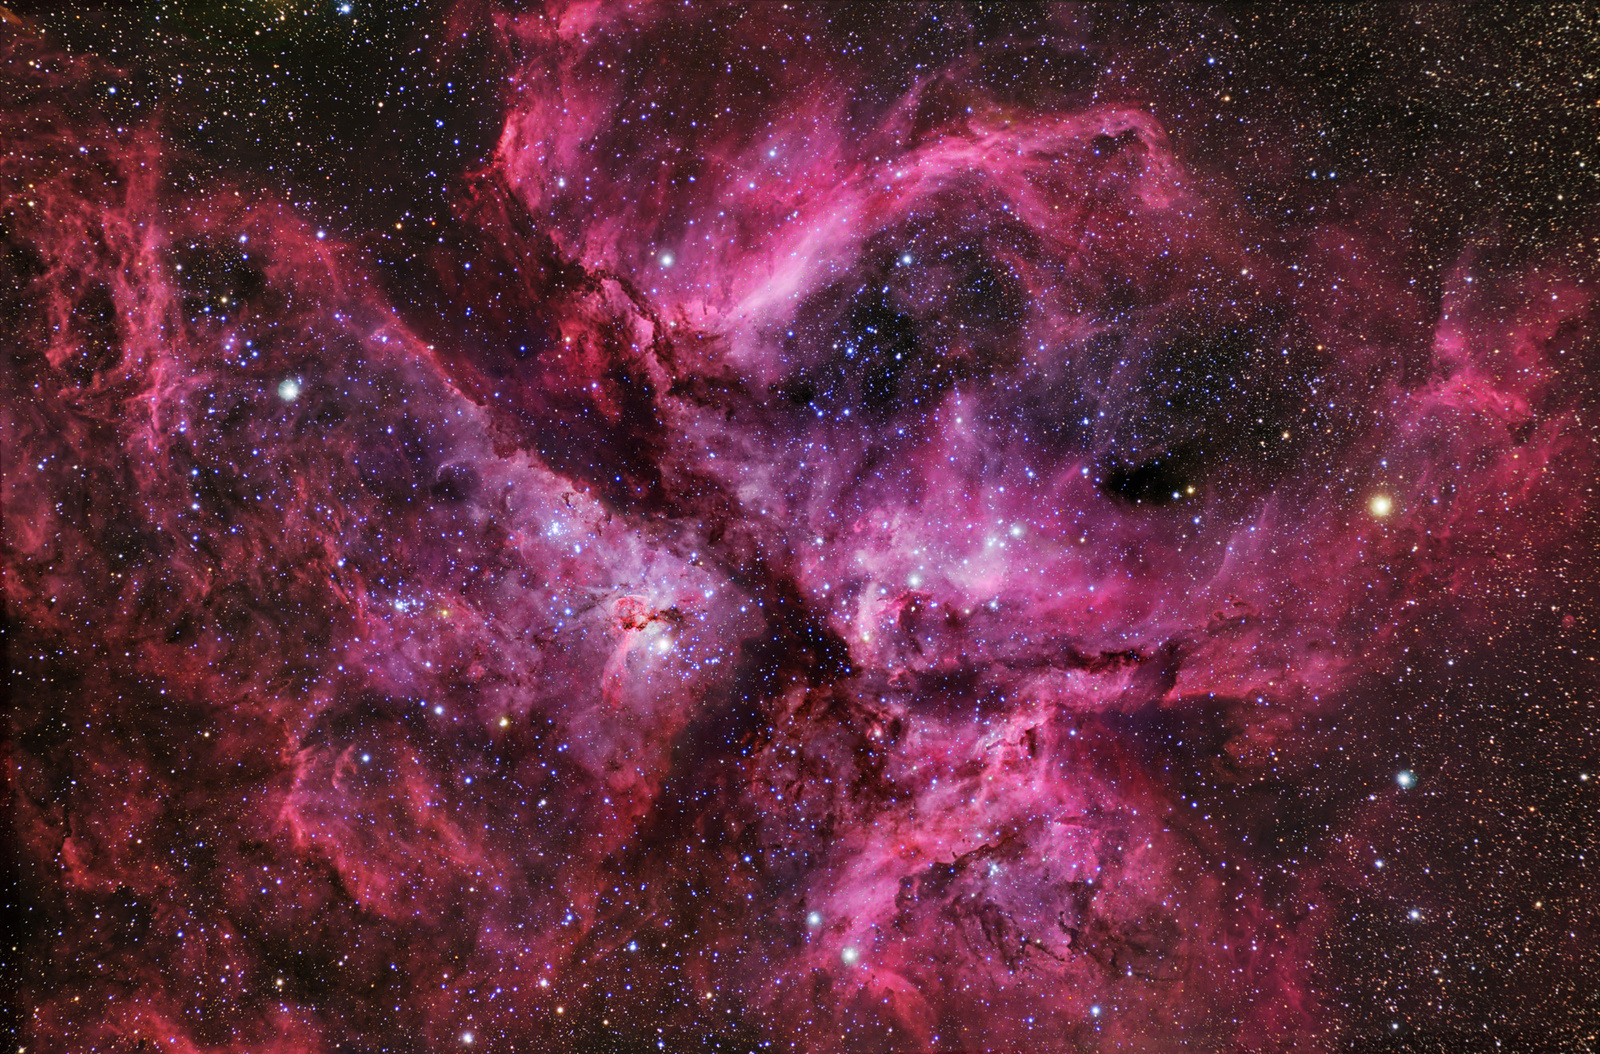 2007 October 27 - The Great Carina Nebula